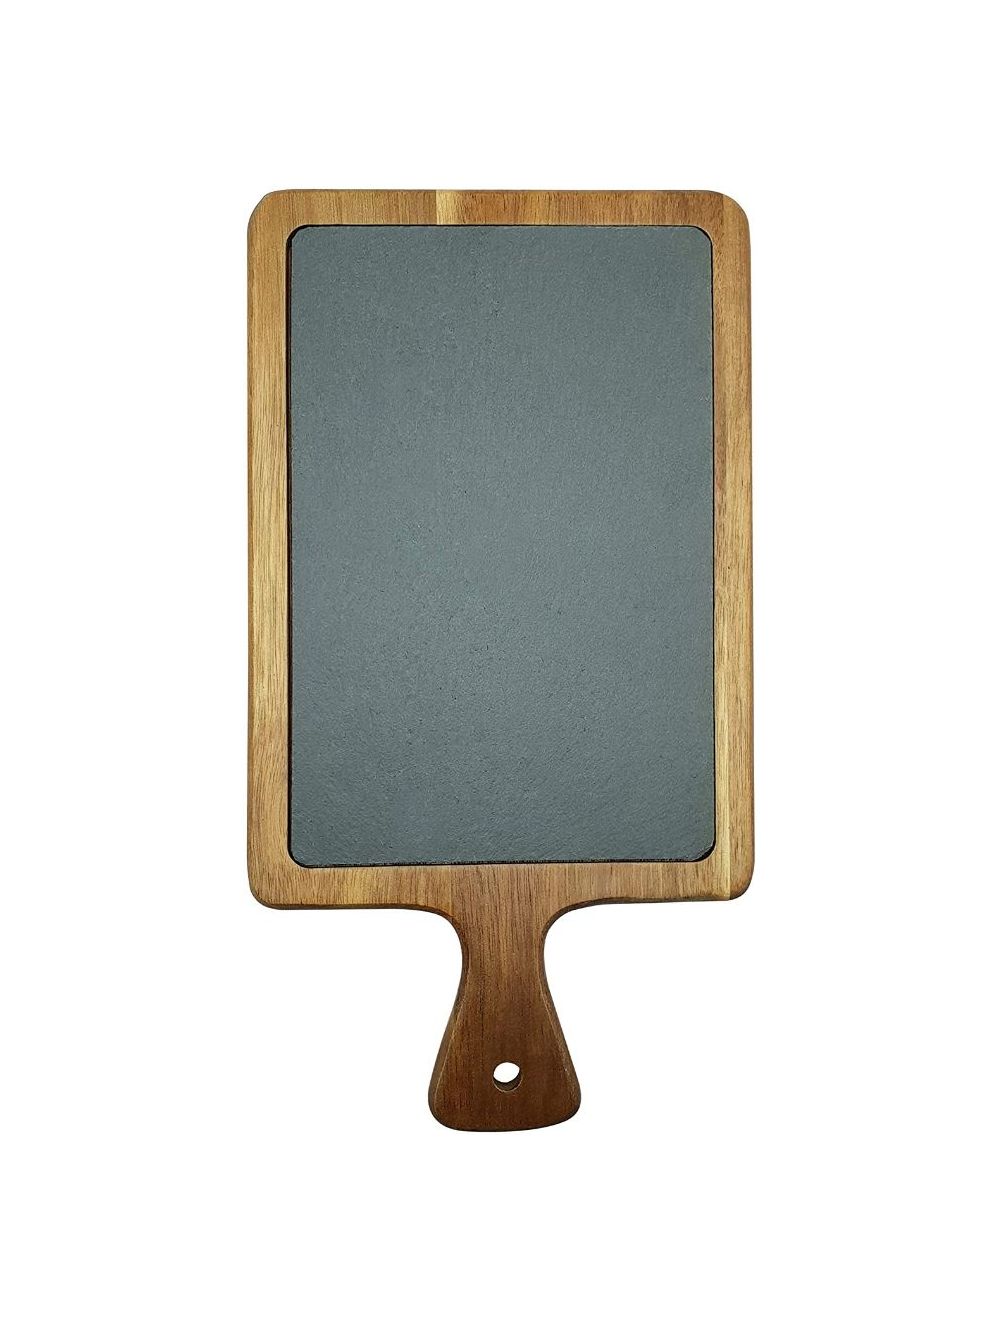 Kitchen Master Acacia Wood and Slate Serving Board Rectangle 34 x 18 x 1.5 cm, Black, Kitchen Master-SL0019